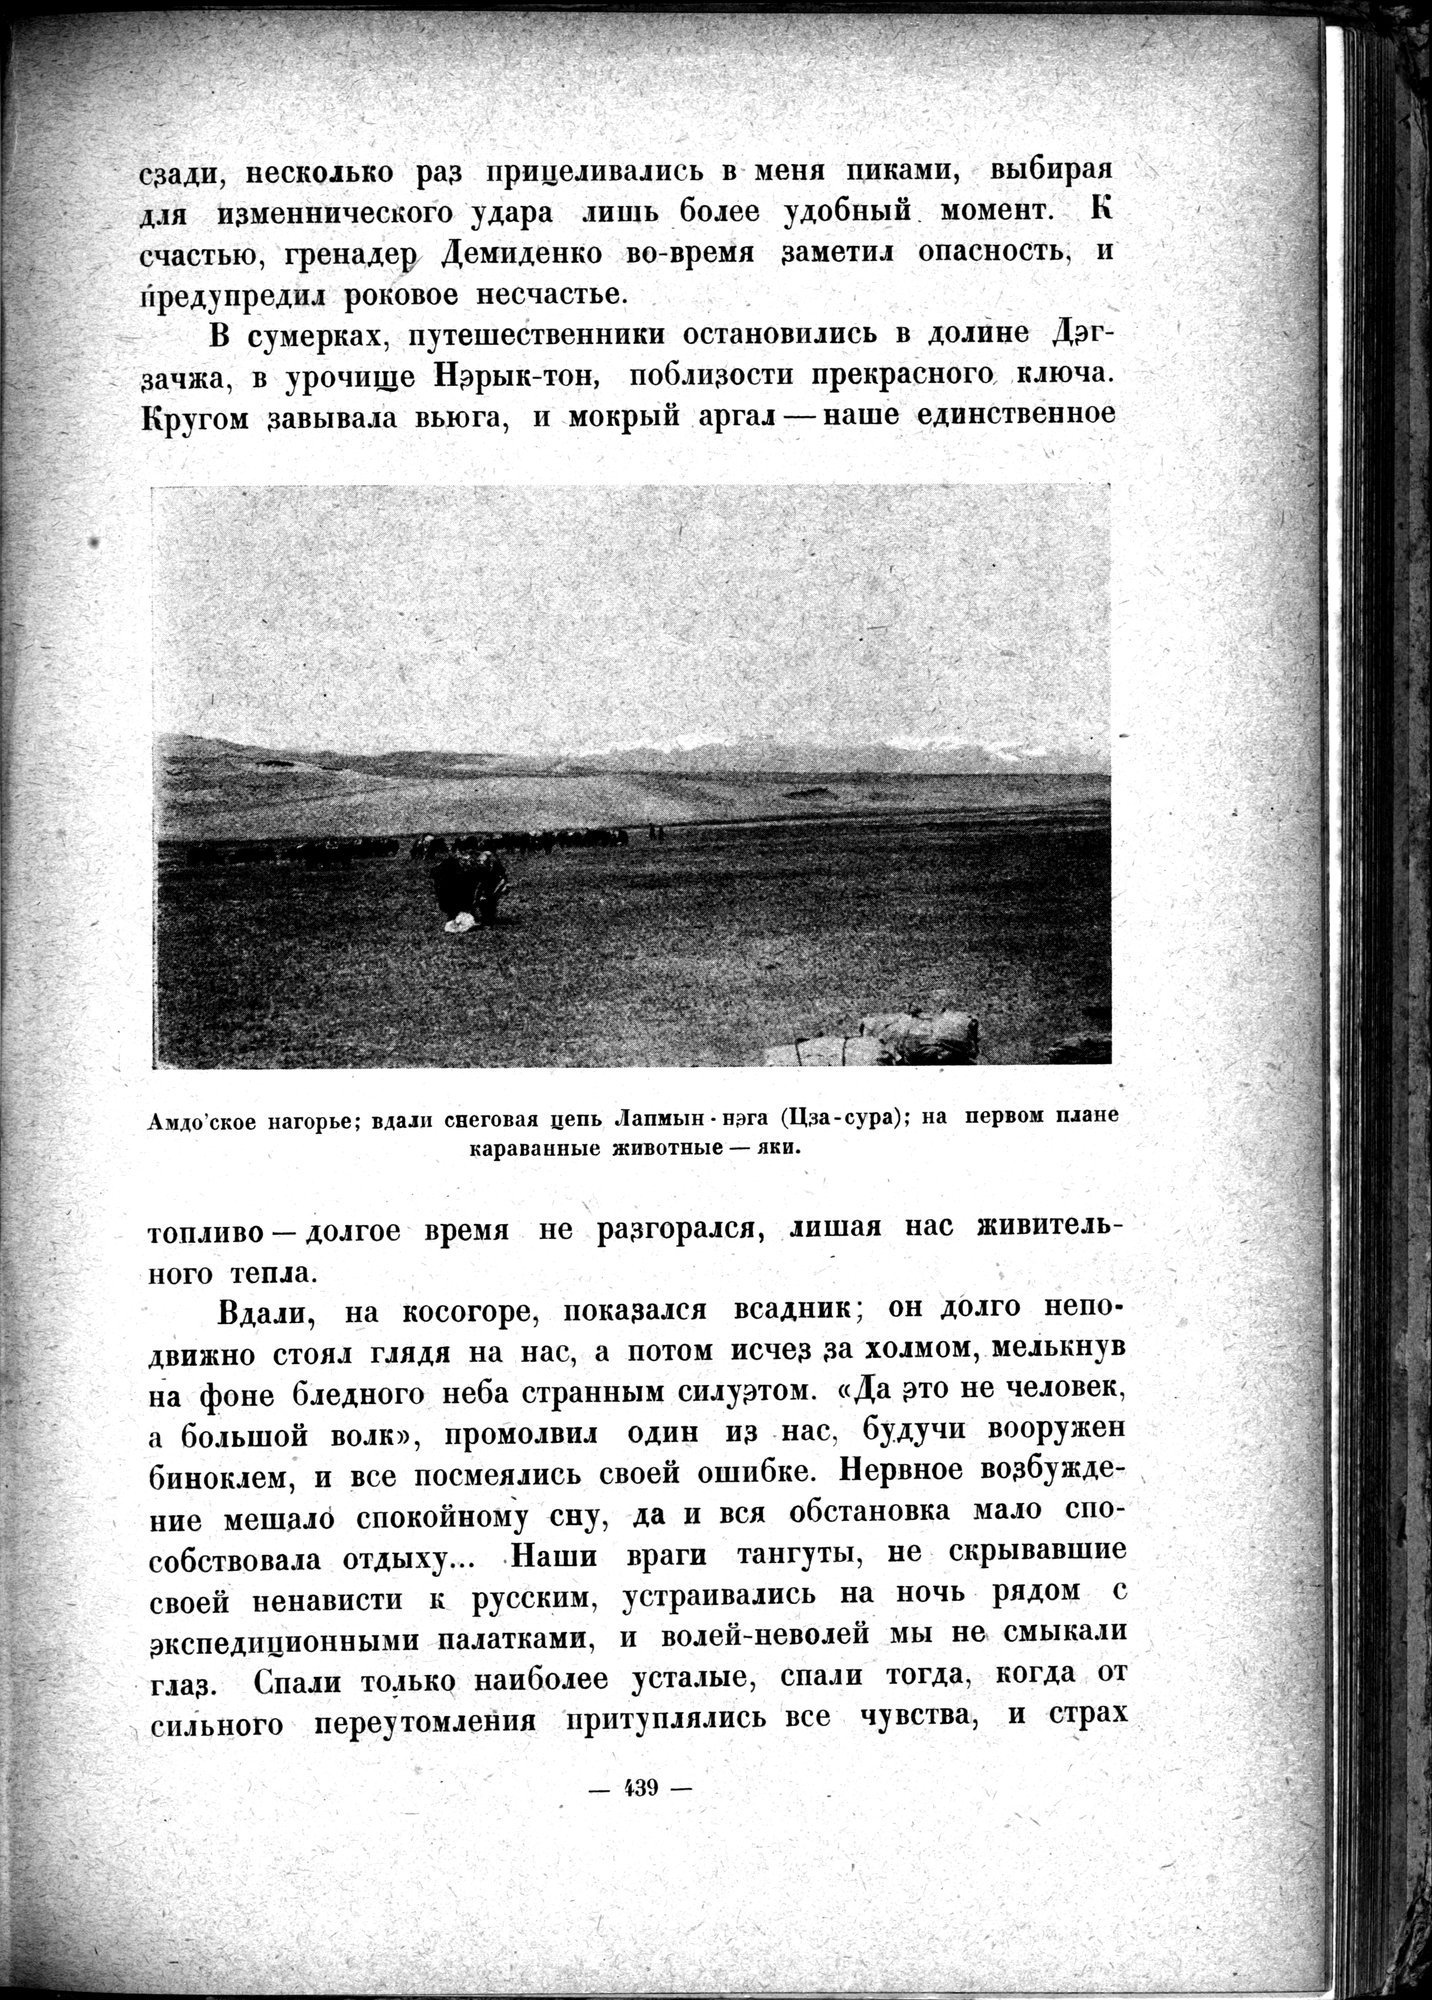 Mongoliya i Amdo i mertby gorod Khara-Khoto : vol.1 / Page 501 (Grayscale High Resolution Image)